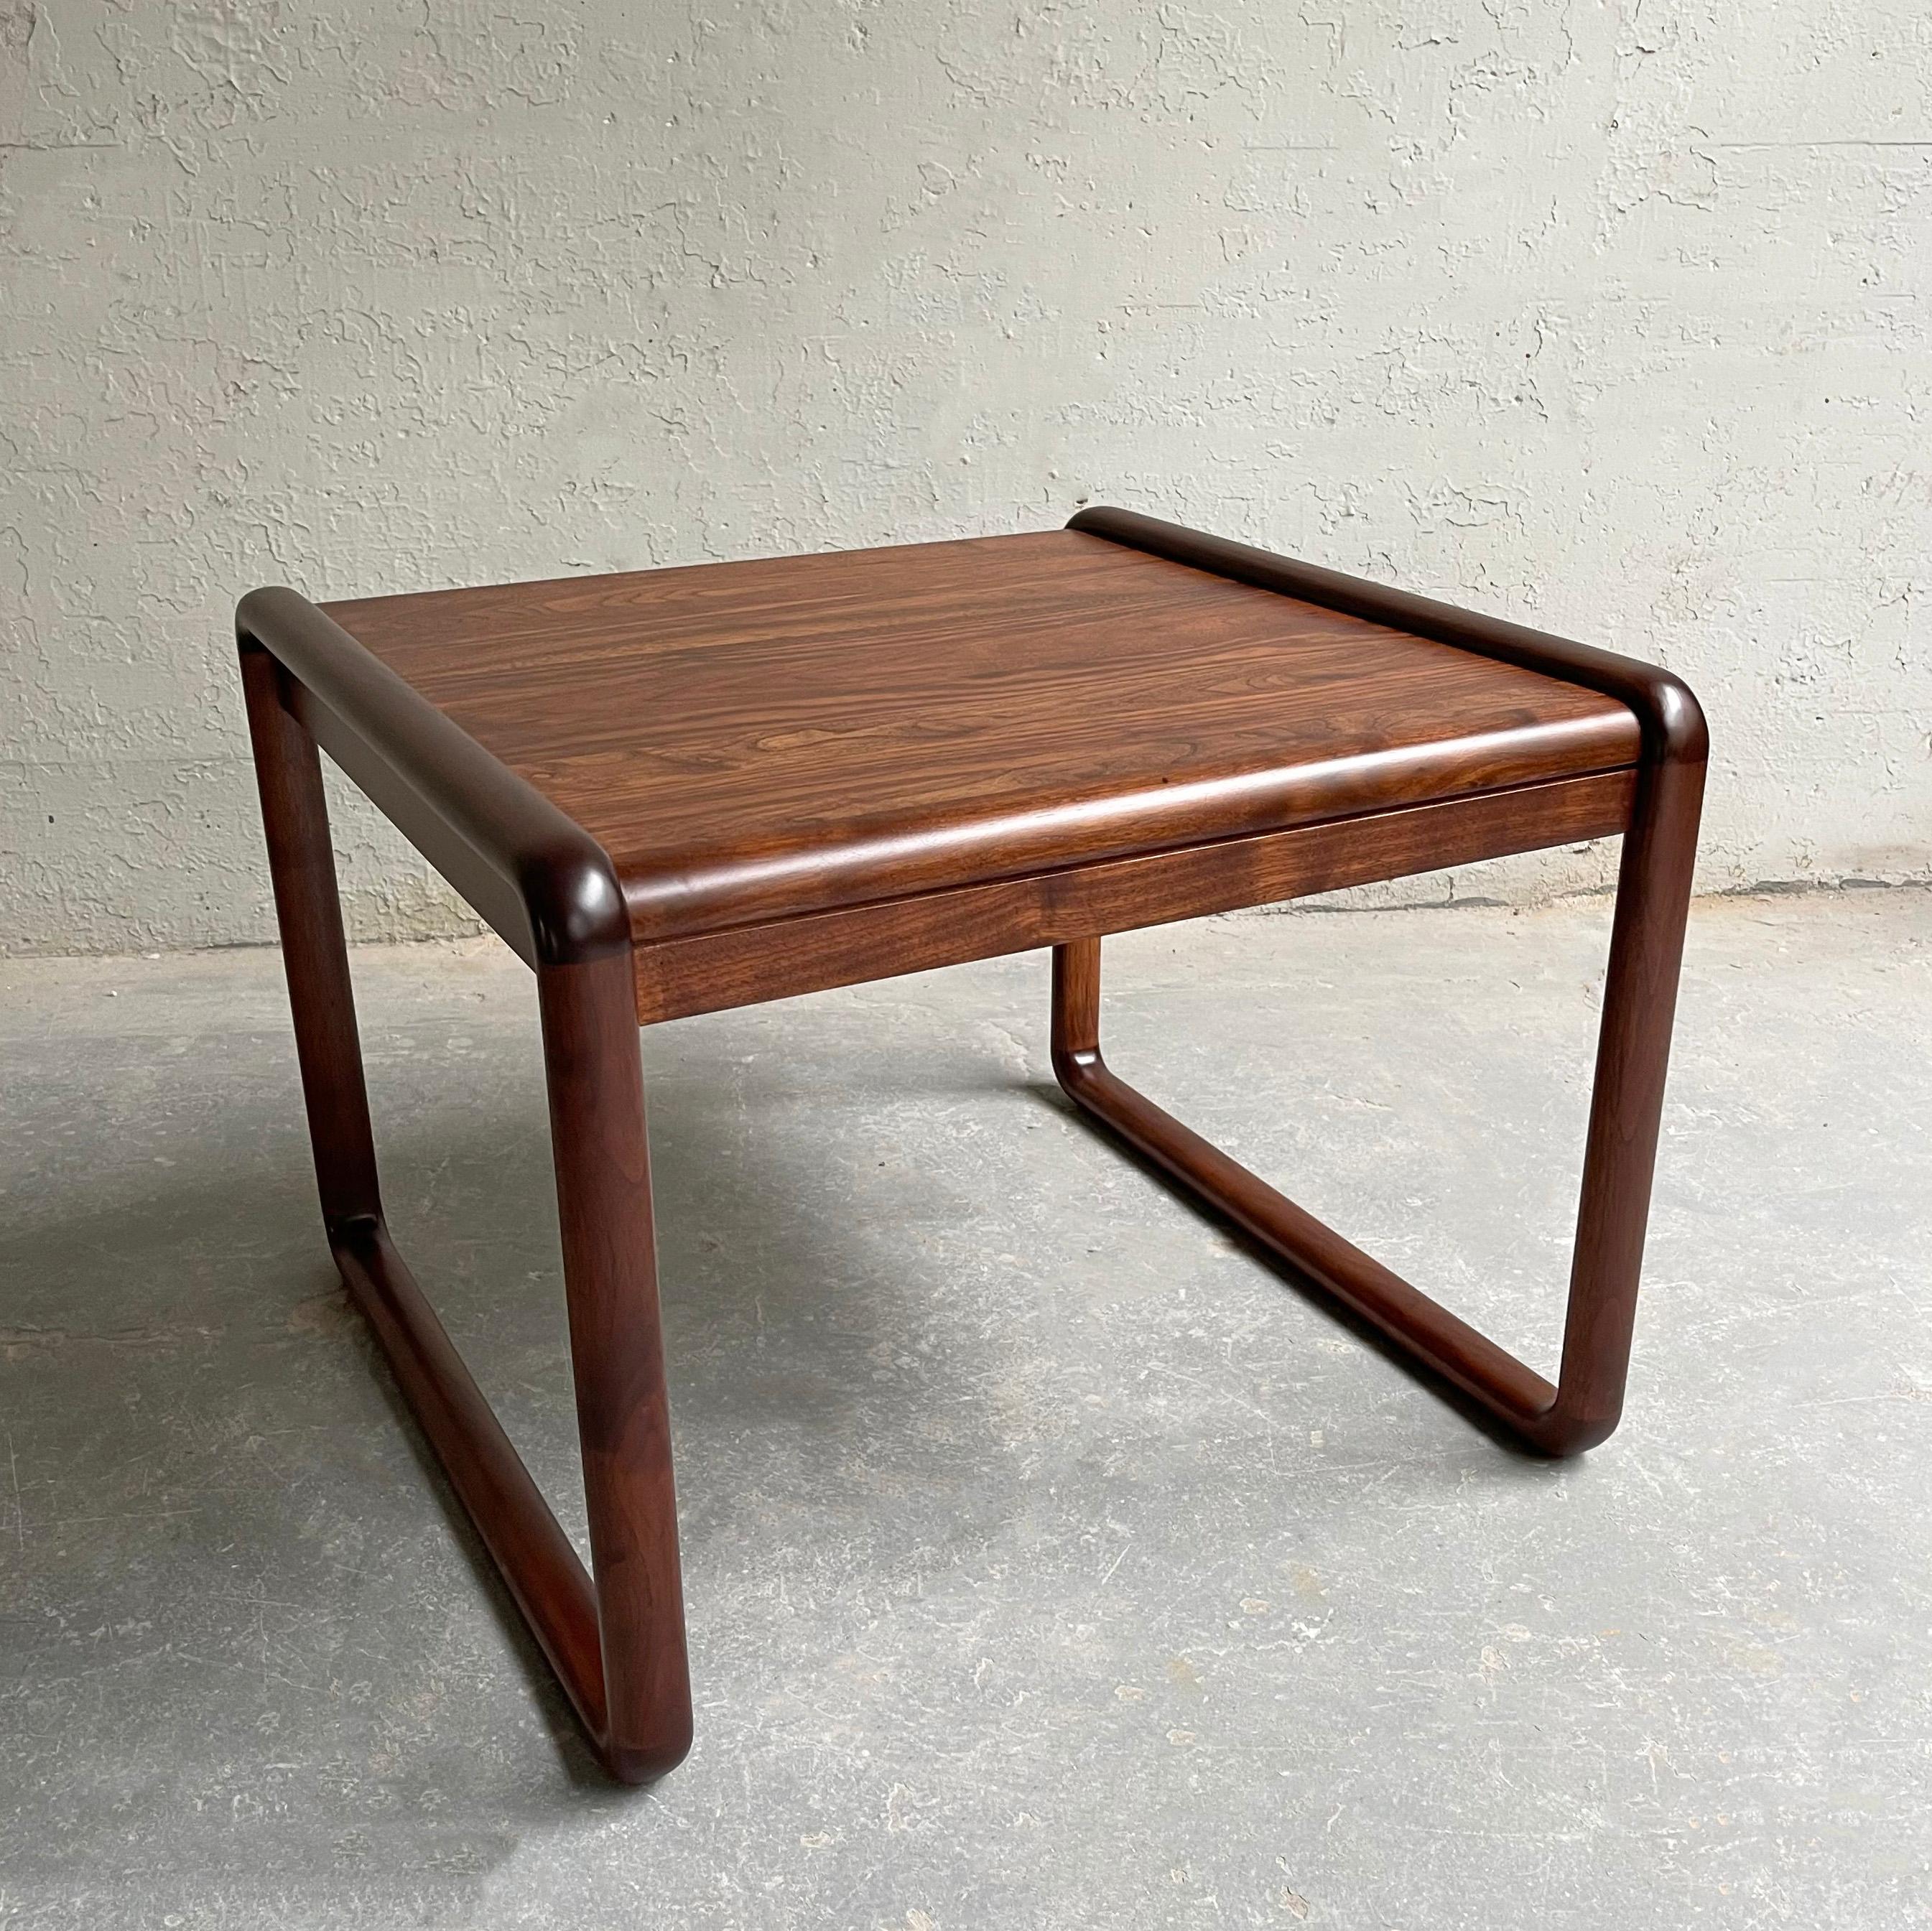 Sleek, Mid-Century Modern, walnut side table by Gunlocke features sculpted sleigh legs.